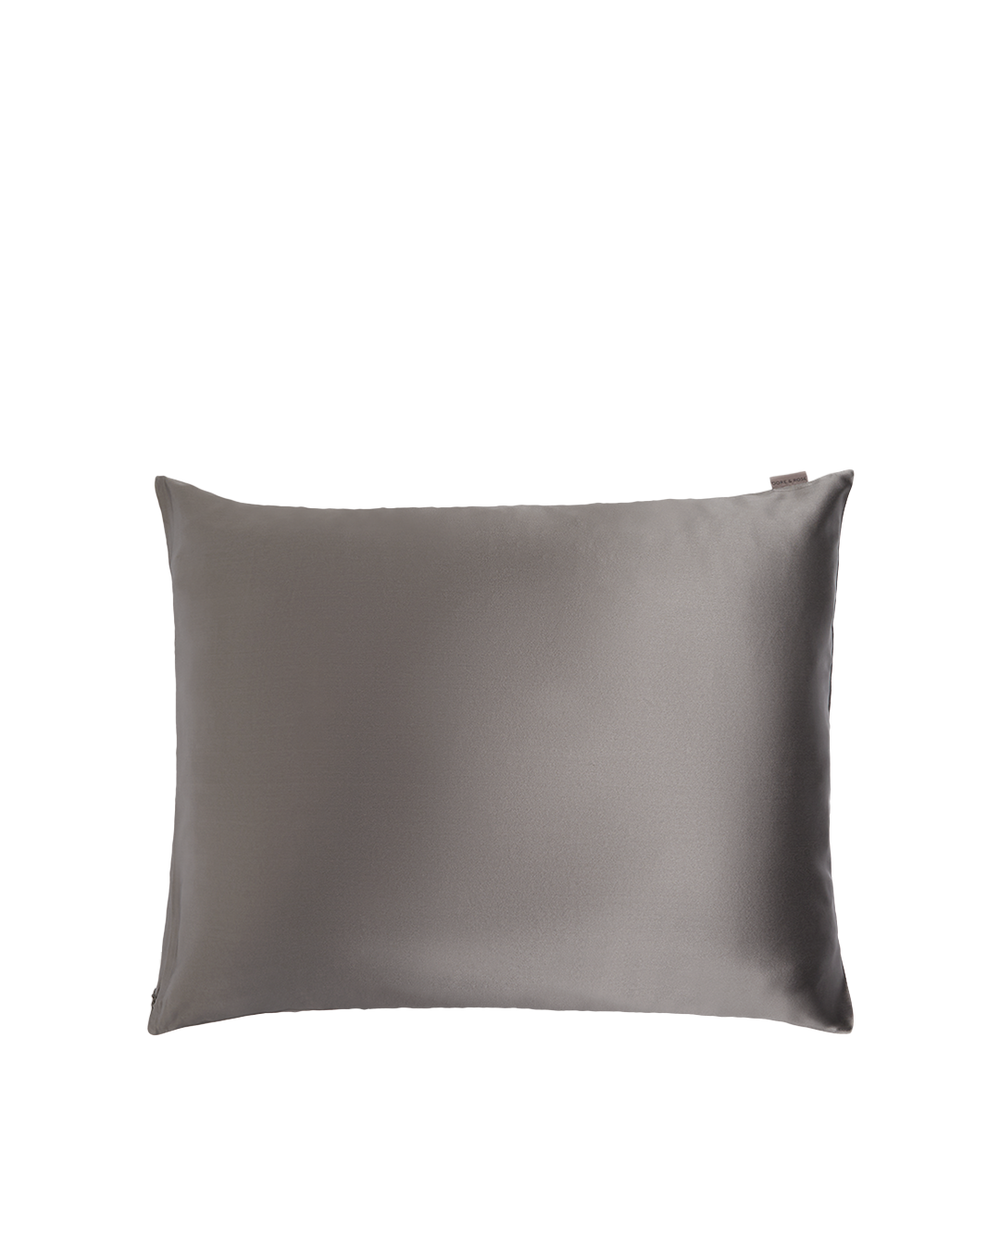 Natural silk pillowcase for skin restoration